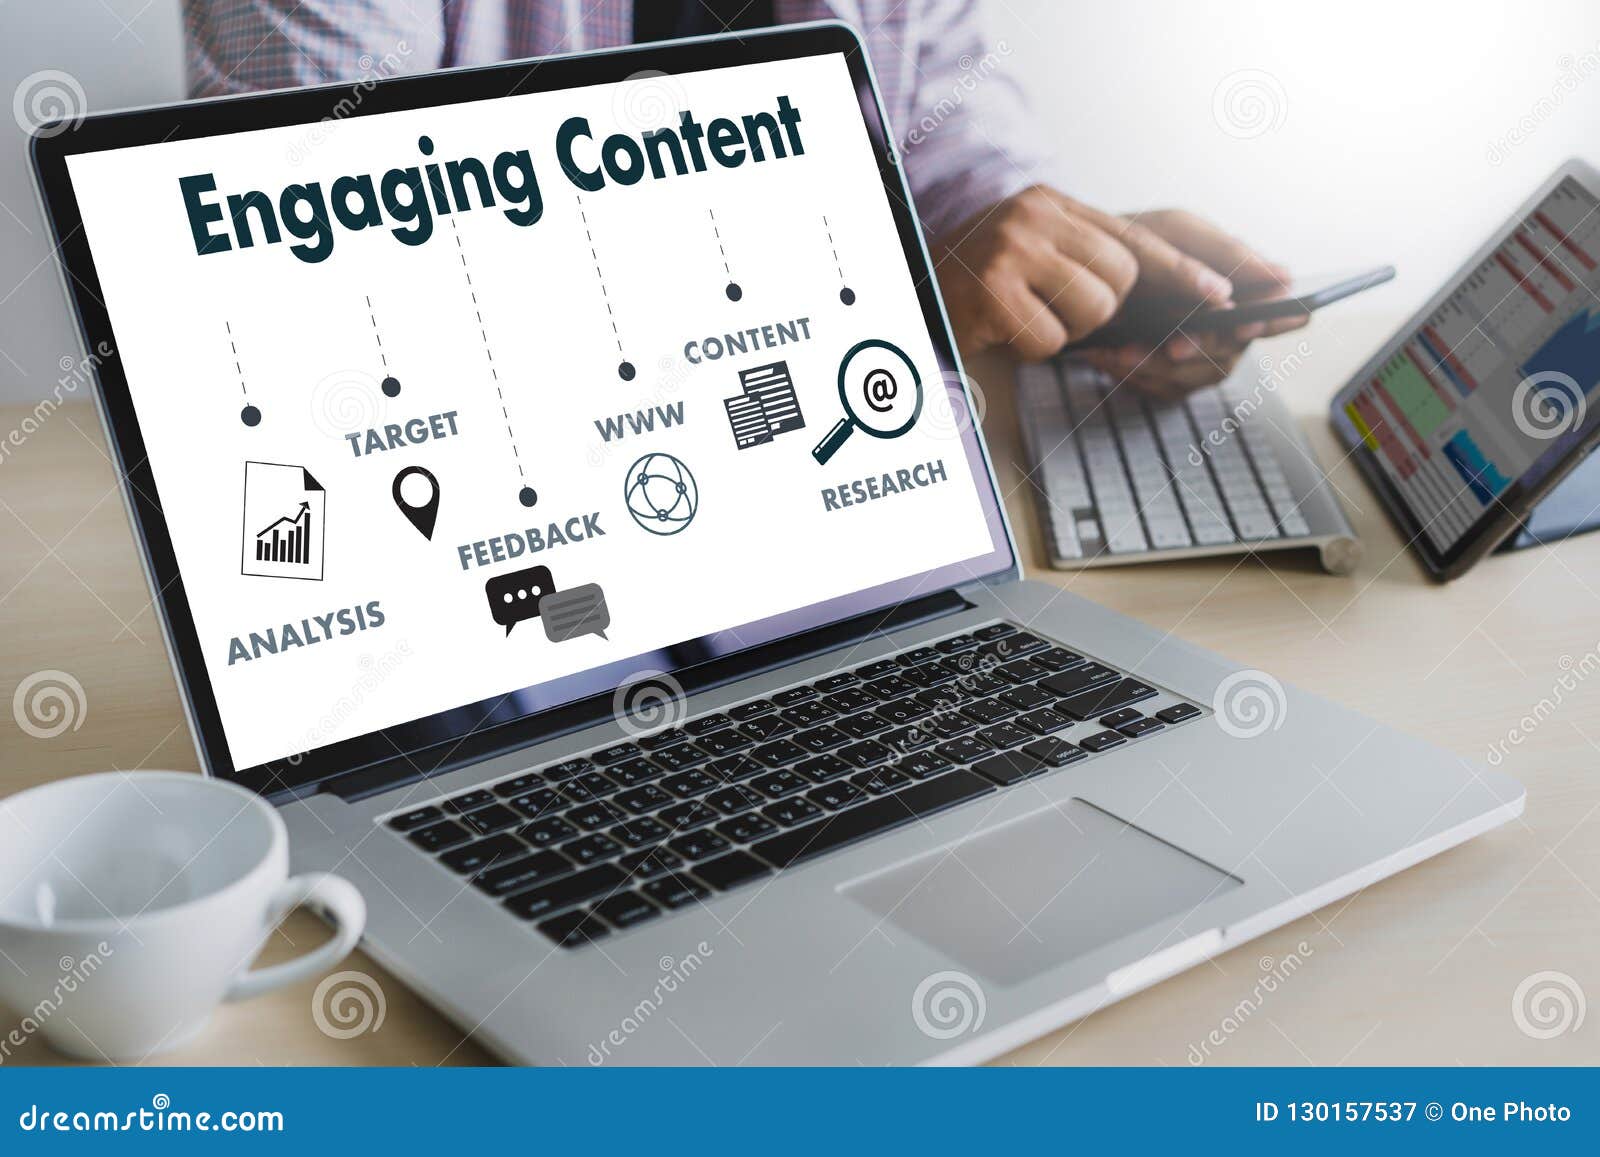 engaging content marketing data blogging media publication info